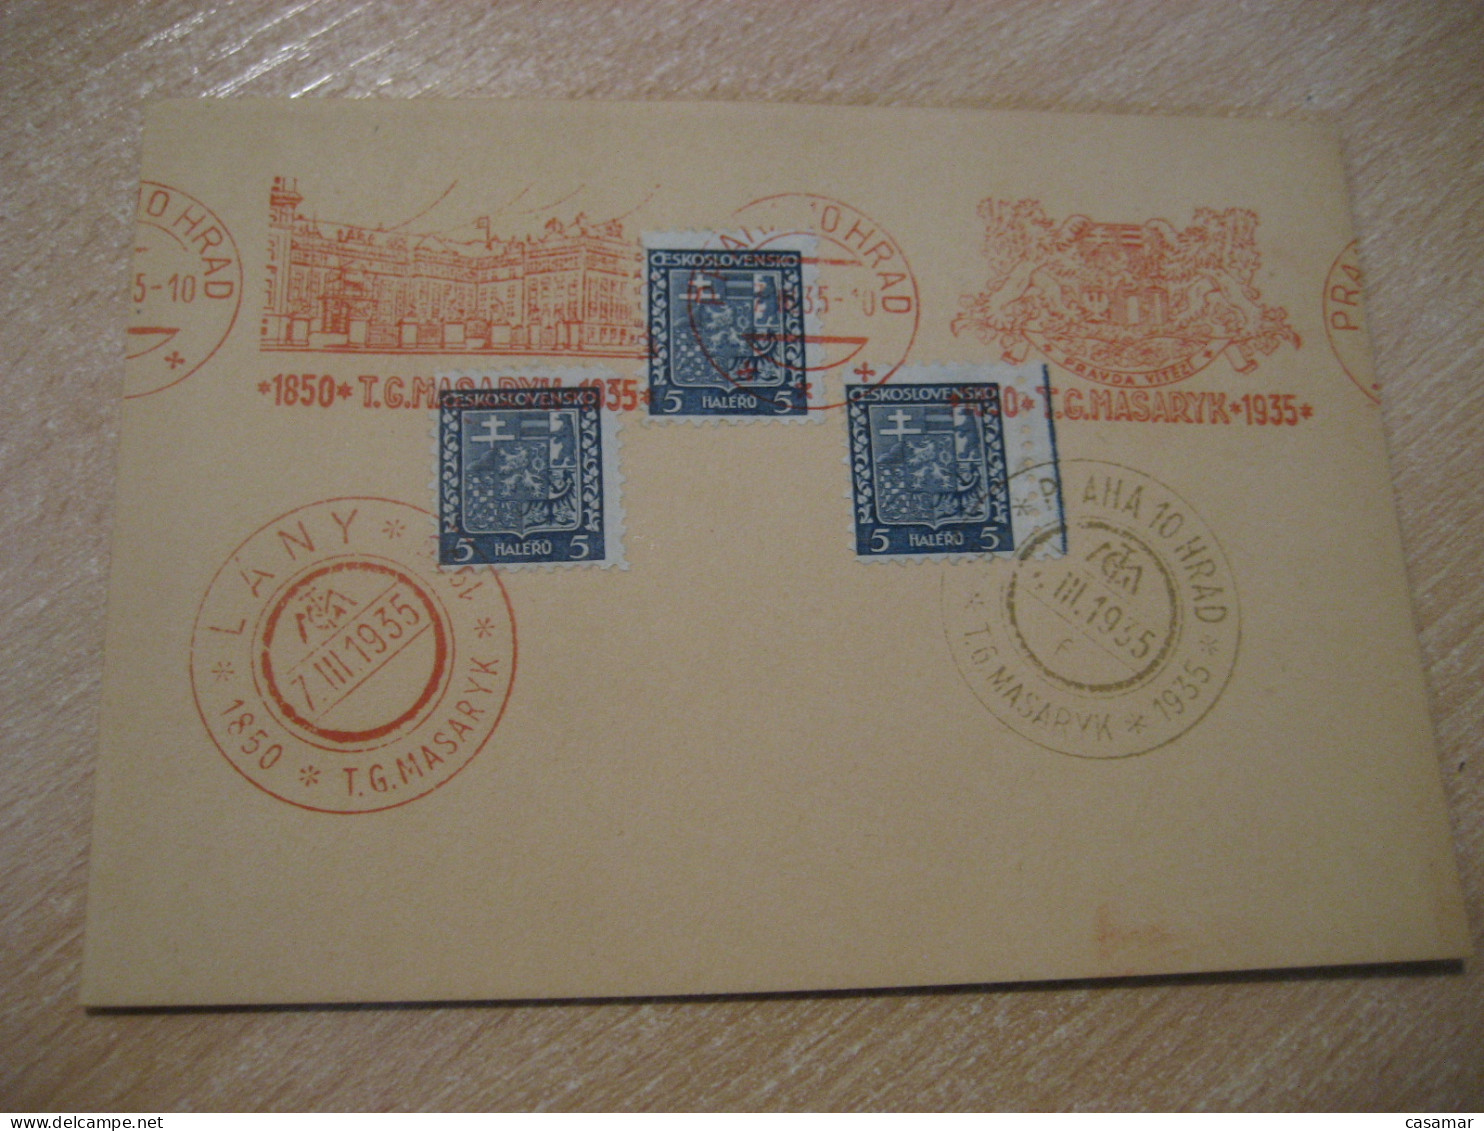 PRAGA 1935 Lany T. G. Masaryk 1850 1935 Meter Mail Cancel Card CZECHOSLOVAKIA - Briefe U. Dokumente